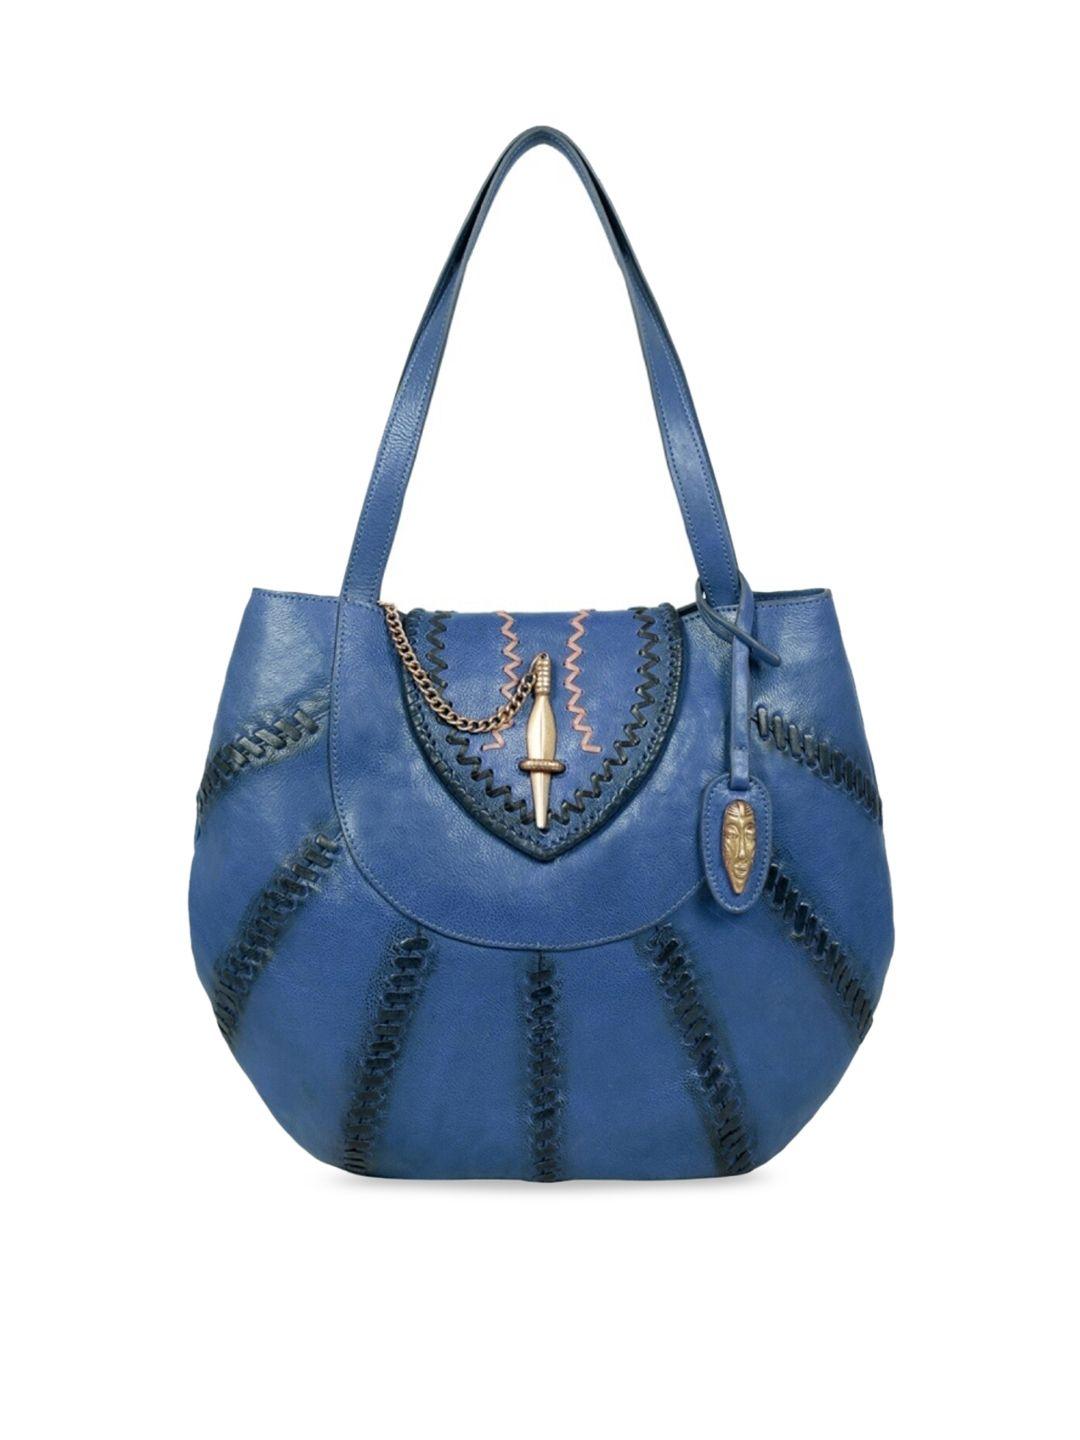 hidesign-blue-textured-leather-structured-handheld-bag